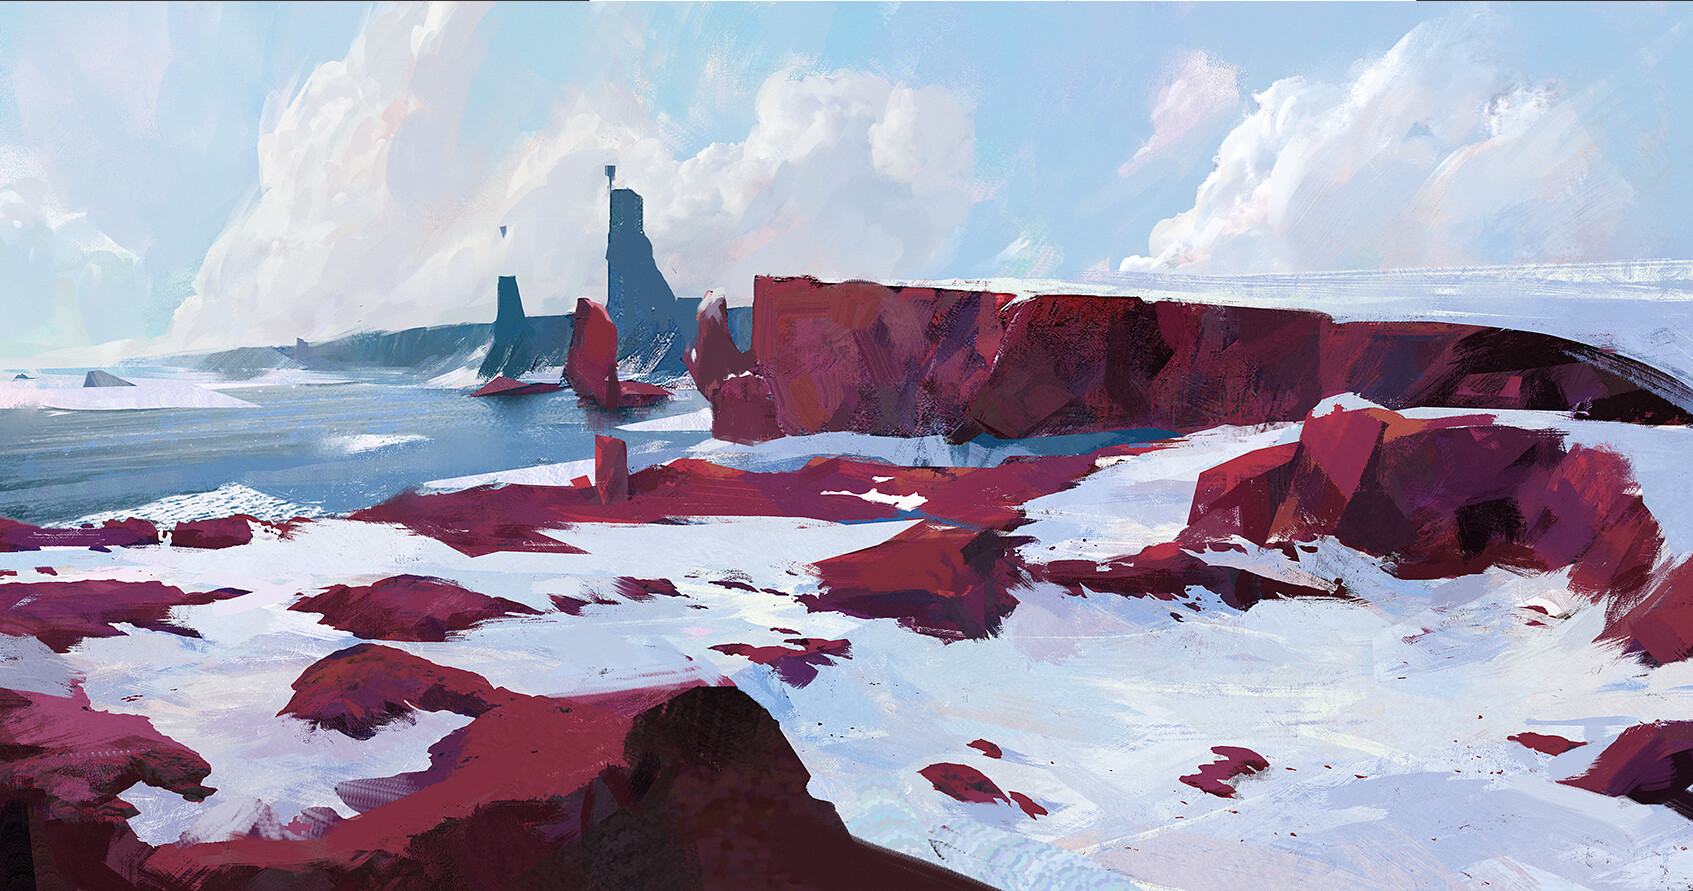 Liang Mark Digital Art Fantasy Art Clouds Red Snow Cliff Ocean View 1693x891